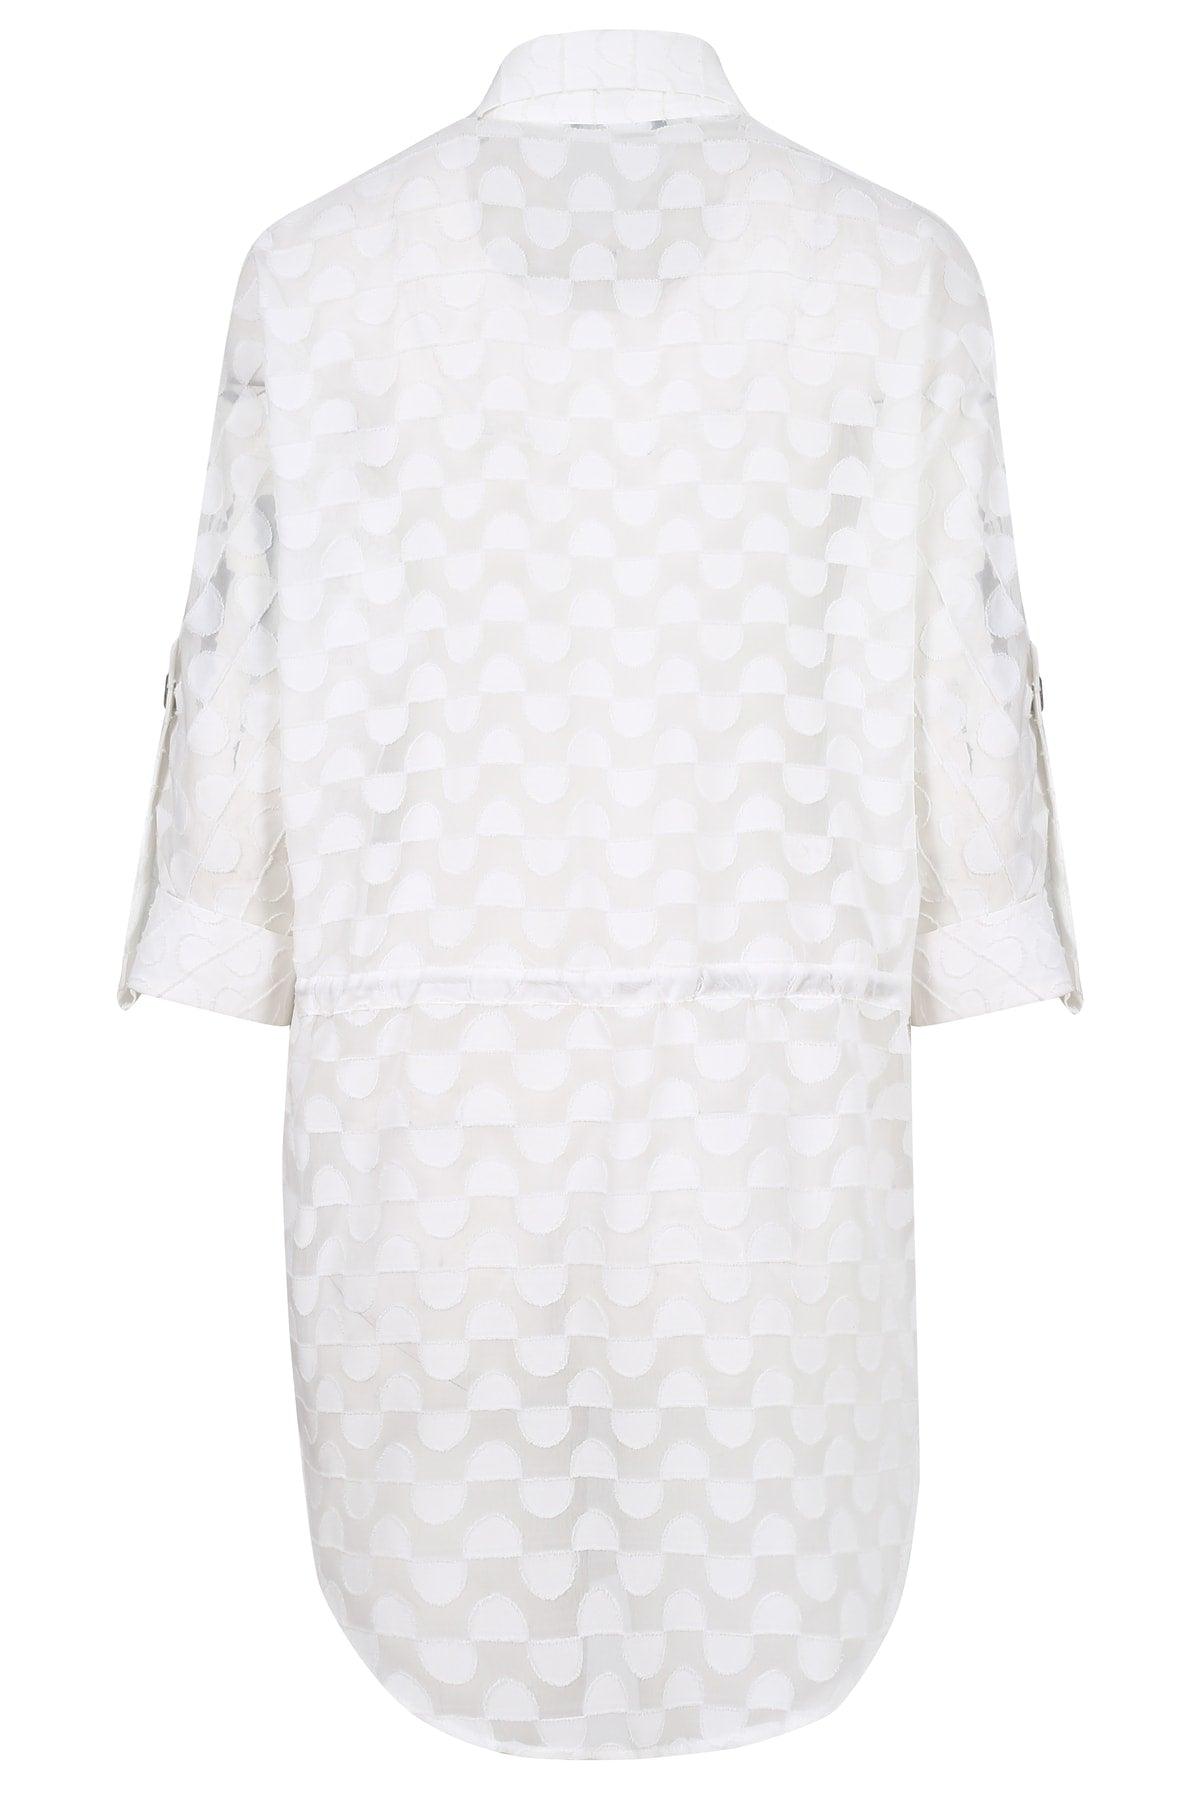 Special Design Couture White Scalloped Transparent Shirt White Shirt Dress - Swordslife